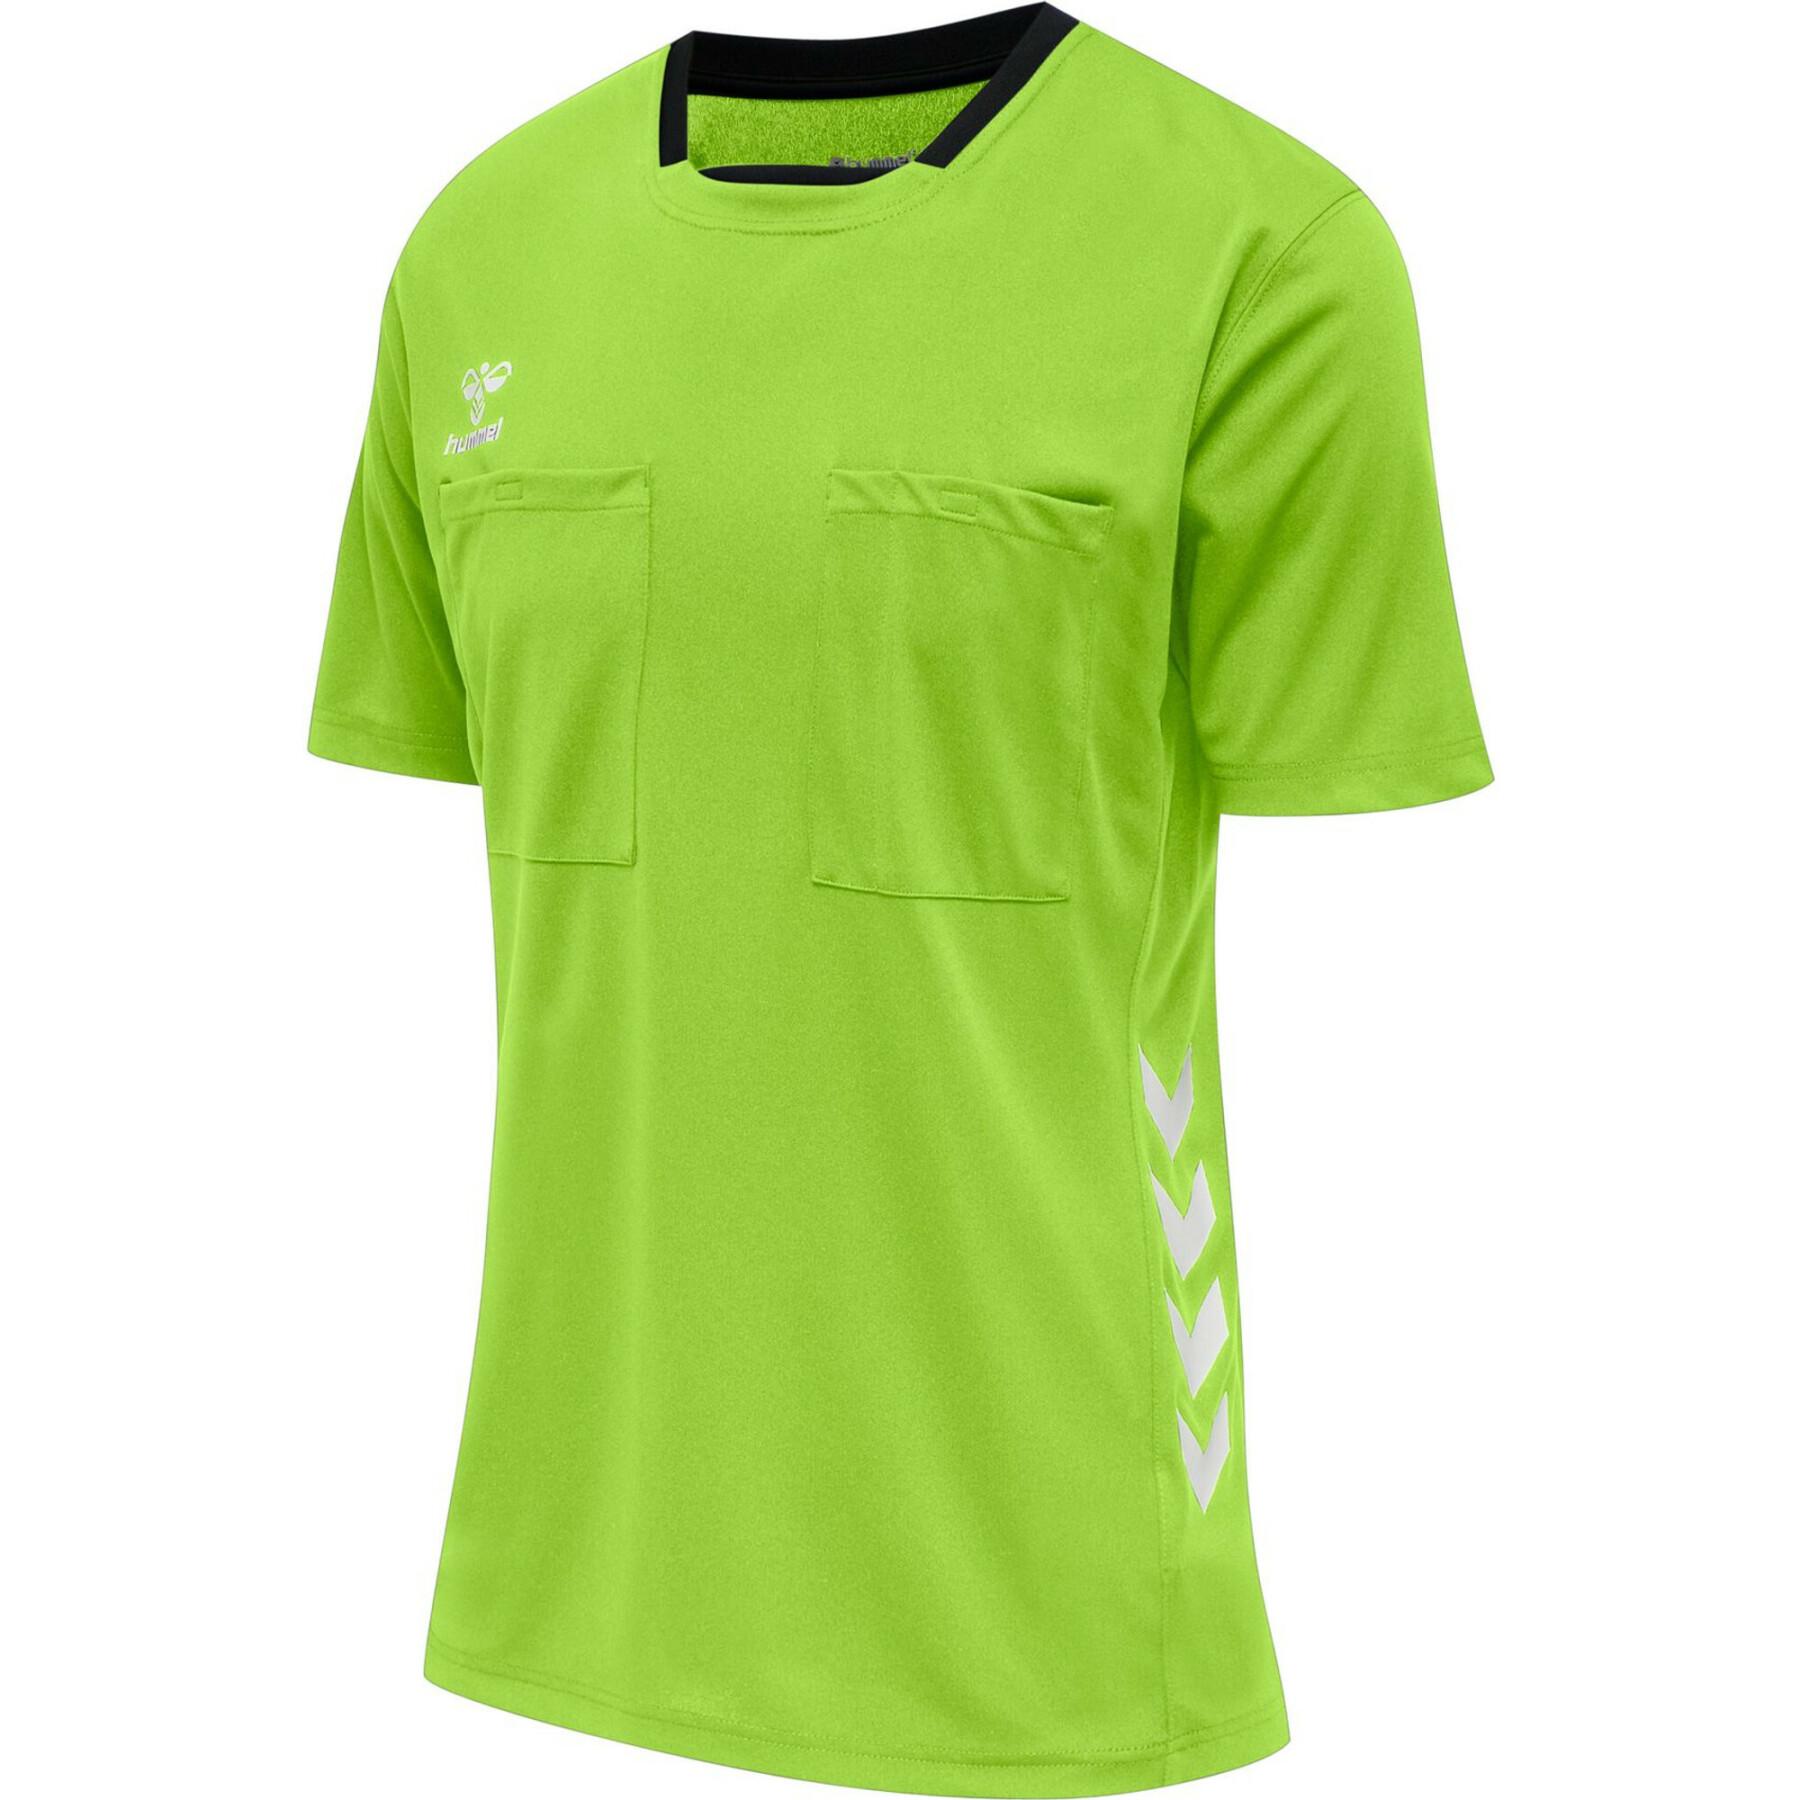 Women's T-shirt Hummel hml referee chevron - T-shirts & polo shirts -  Women's wear - Handball wear